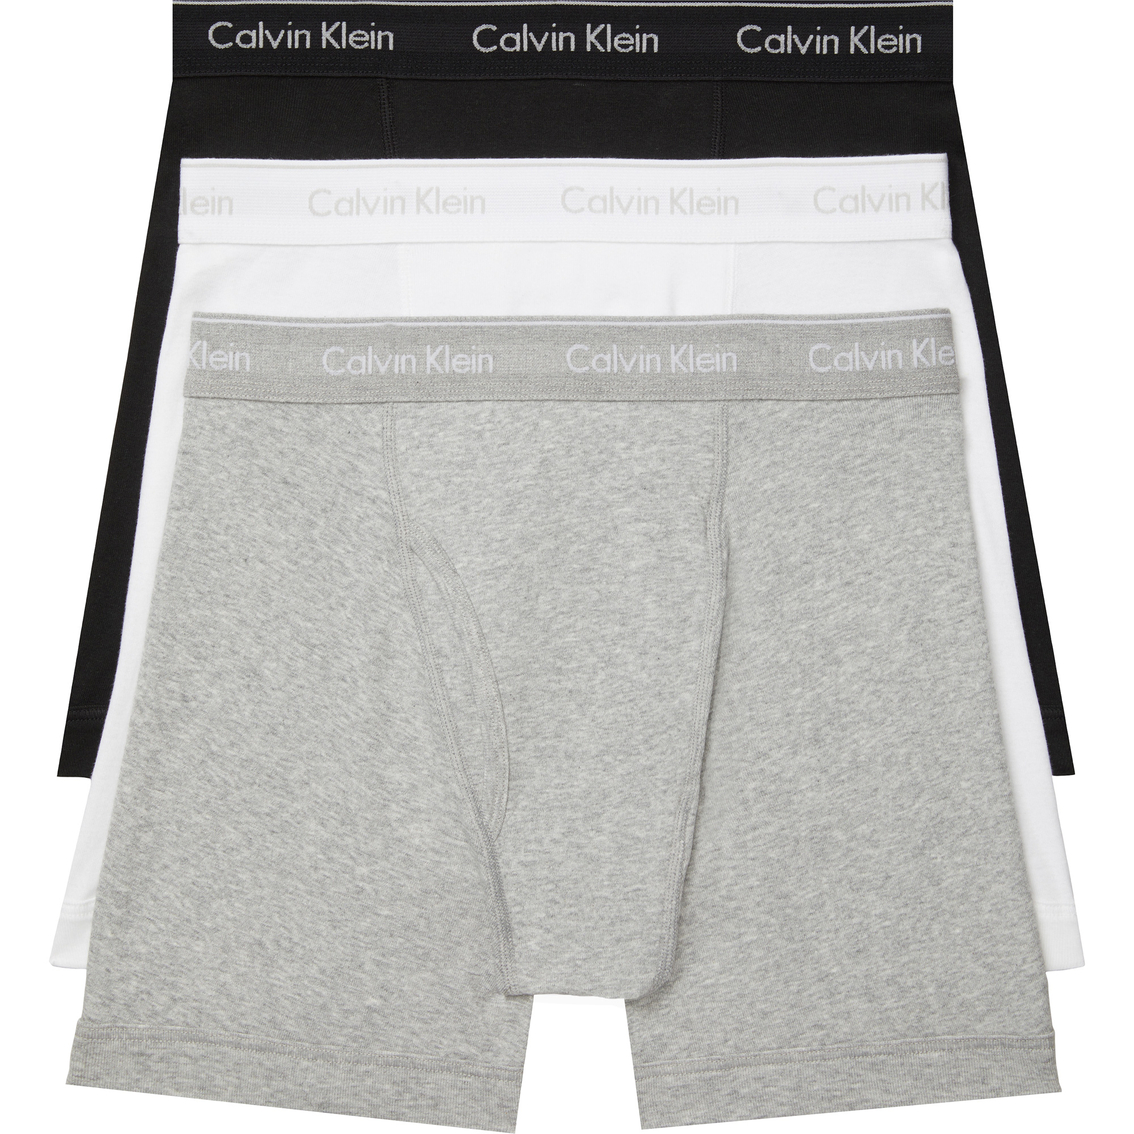 Calvin Klein Cotton Classic Plastic Printed Box Boxer Briefs 3 pk. - Image 2 of 2